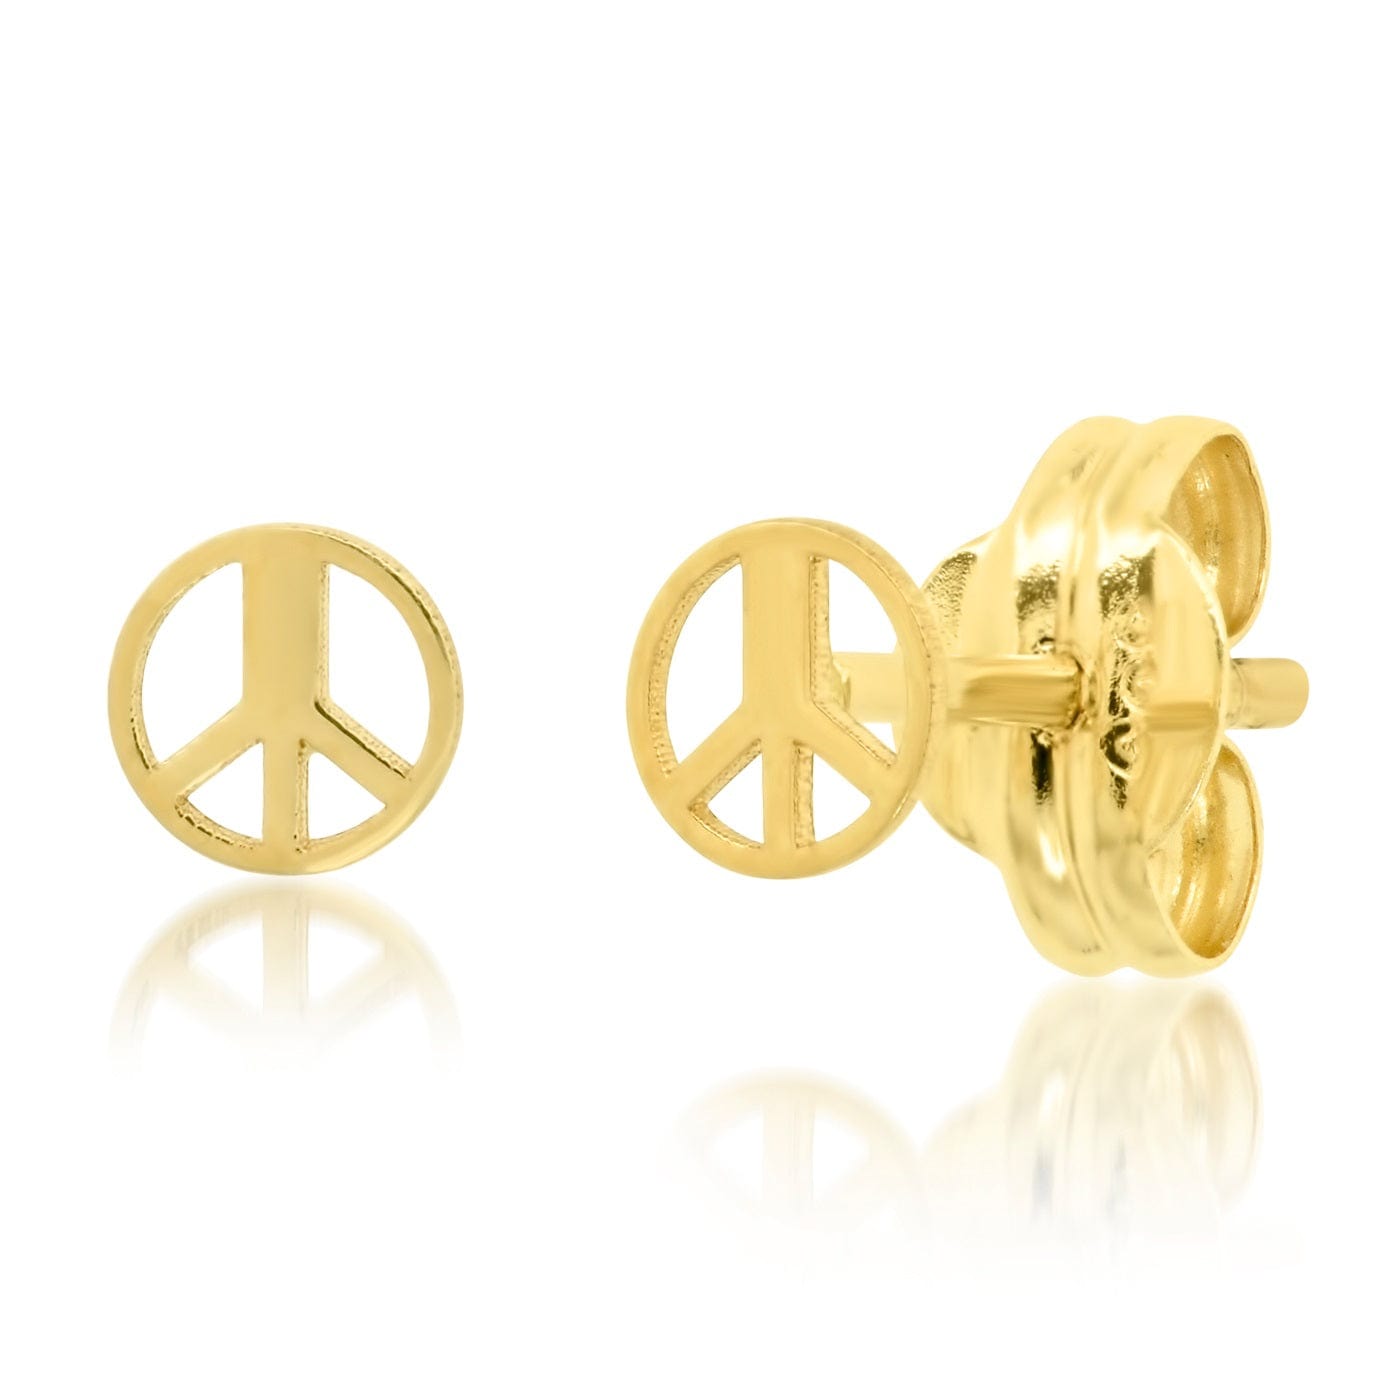 TAI JEWELRY Earrings 14k Gold 14k Peace Sign Studs